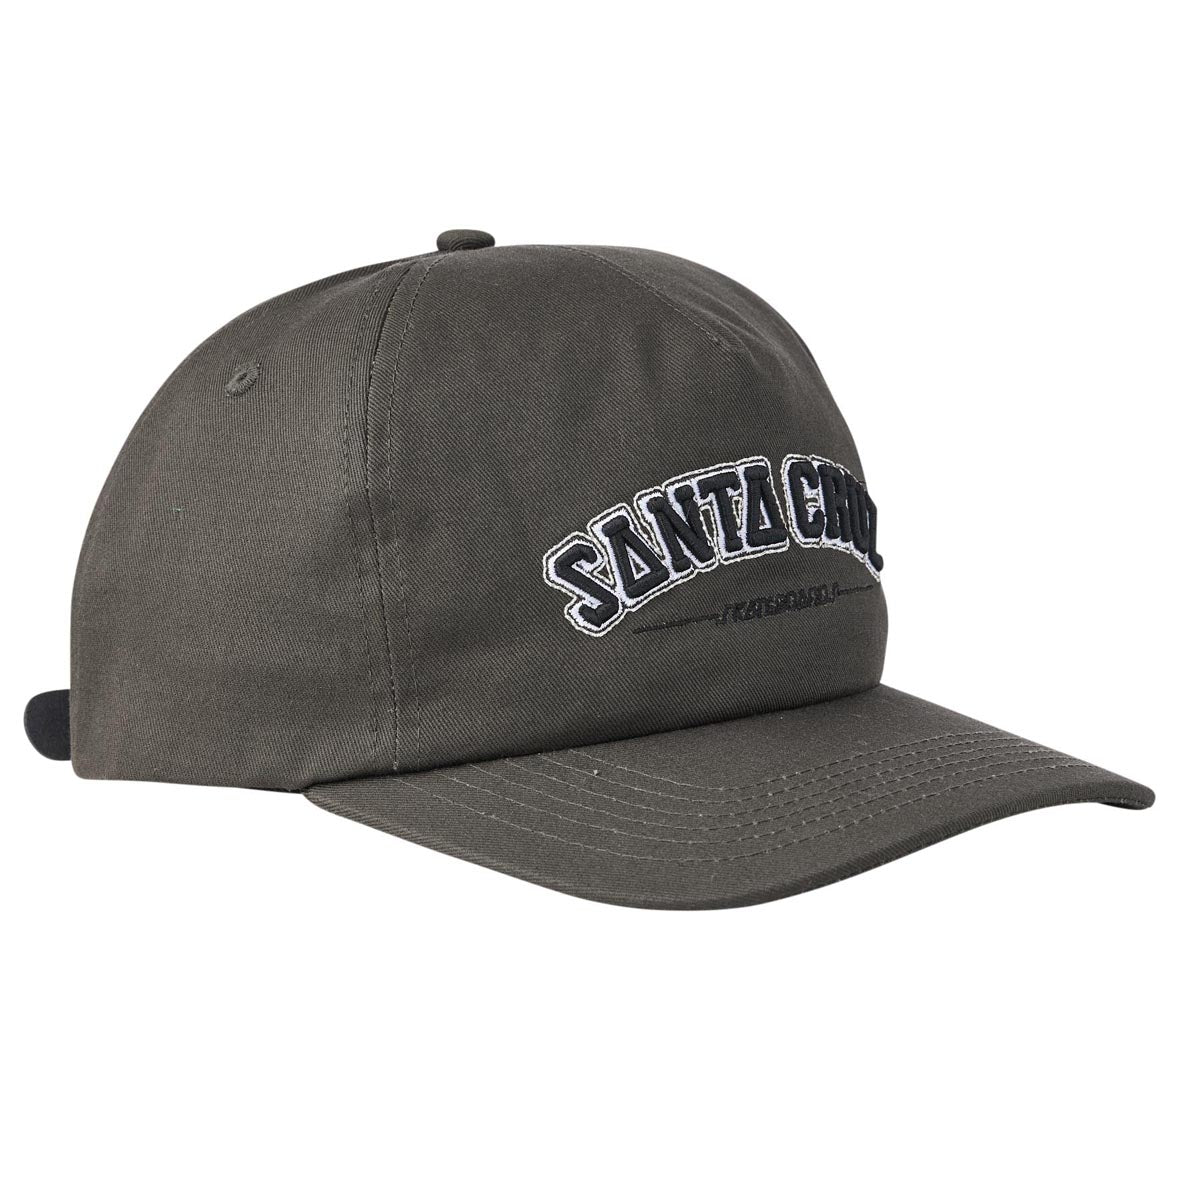 Santa Cruz Collegiate Strapback Hat - Eco Grey image 2